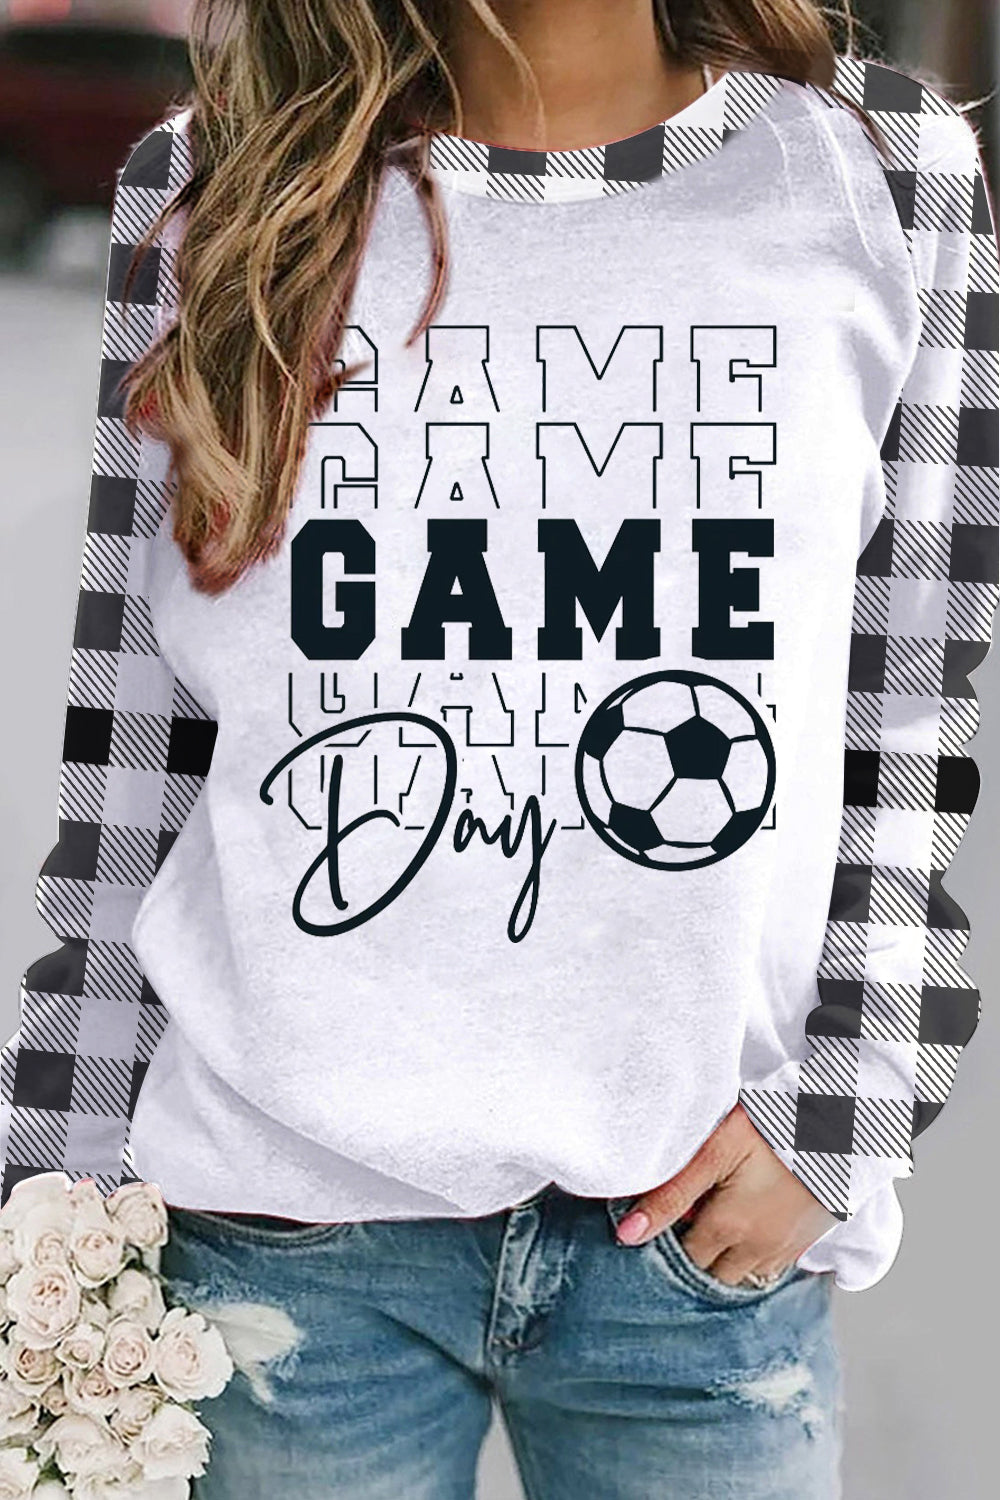 Game Day Soccer Ball Print Plaid Sweatshirt